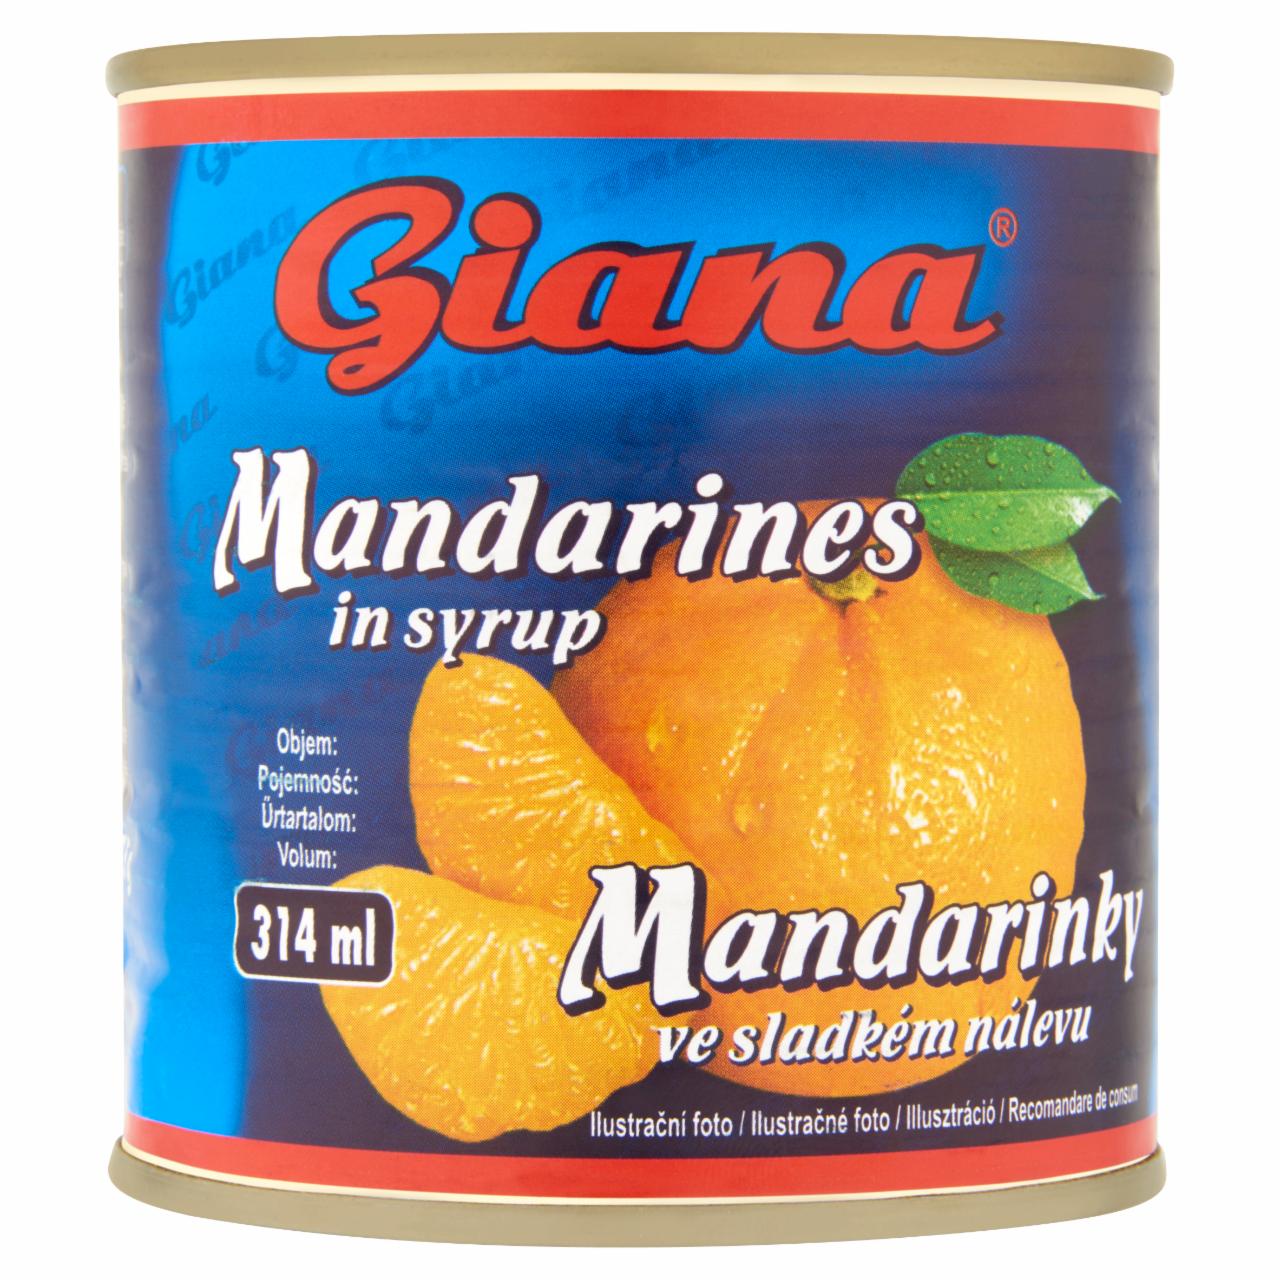 Képek - Giana mandarinbefőtt 312 g